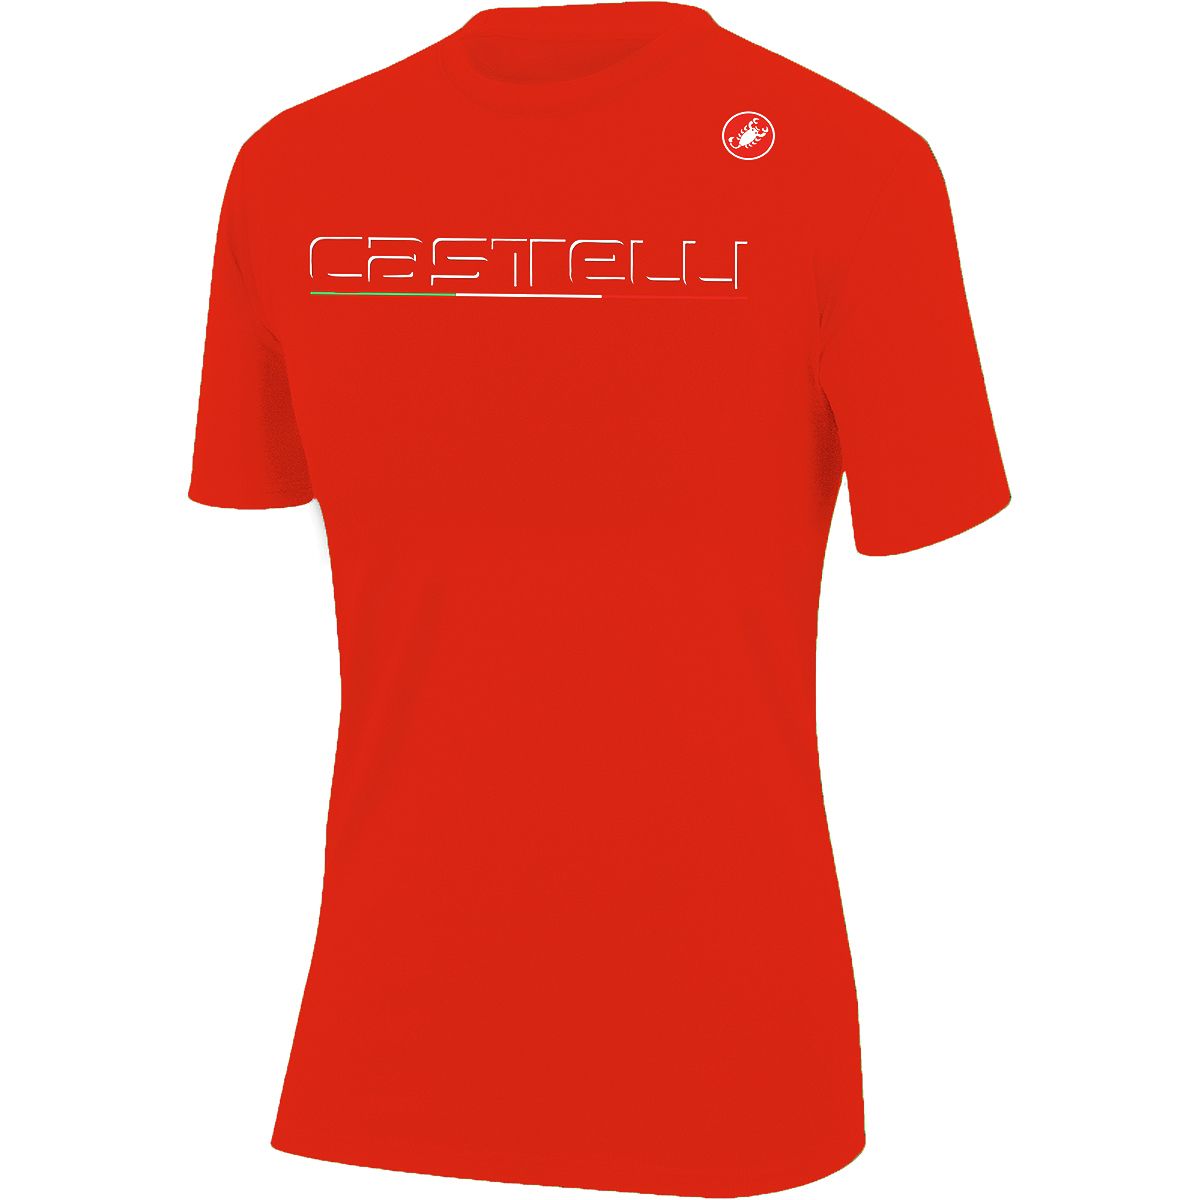 Castelli Classic T-Shirt - Men's